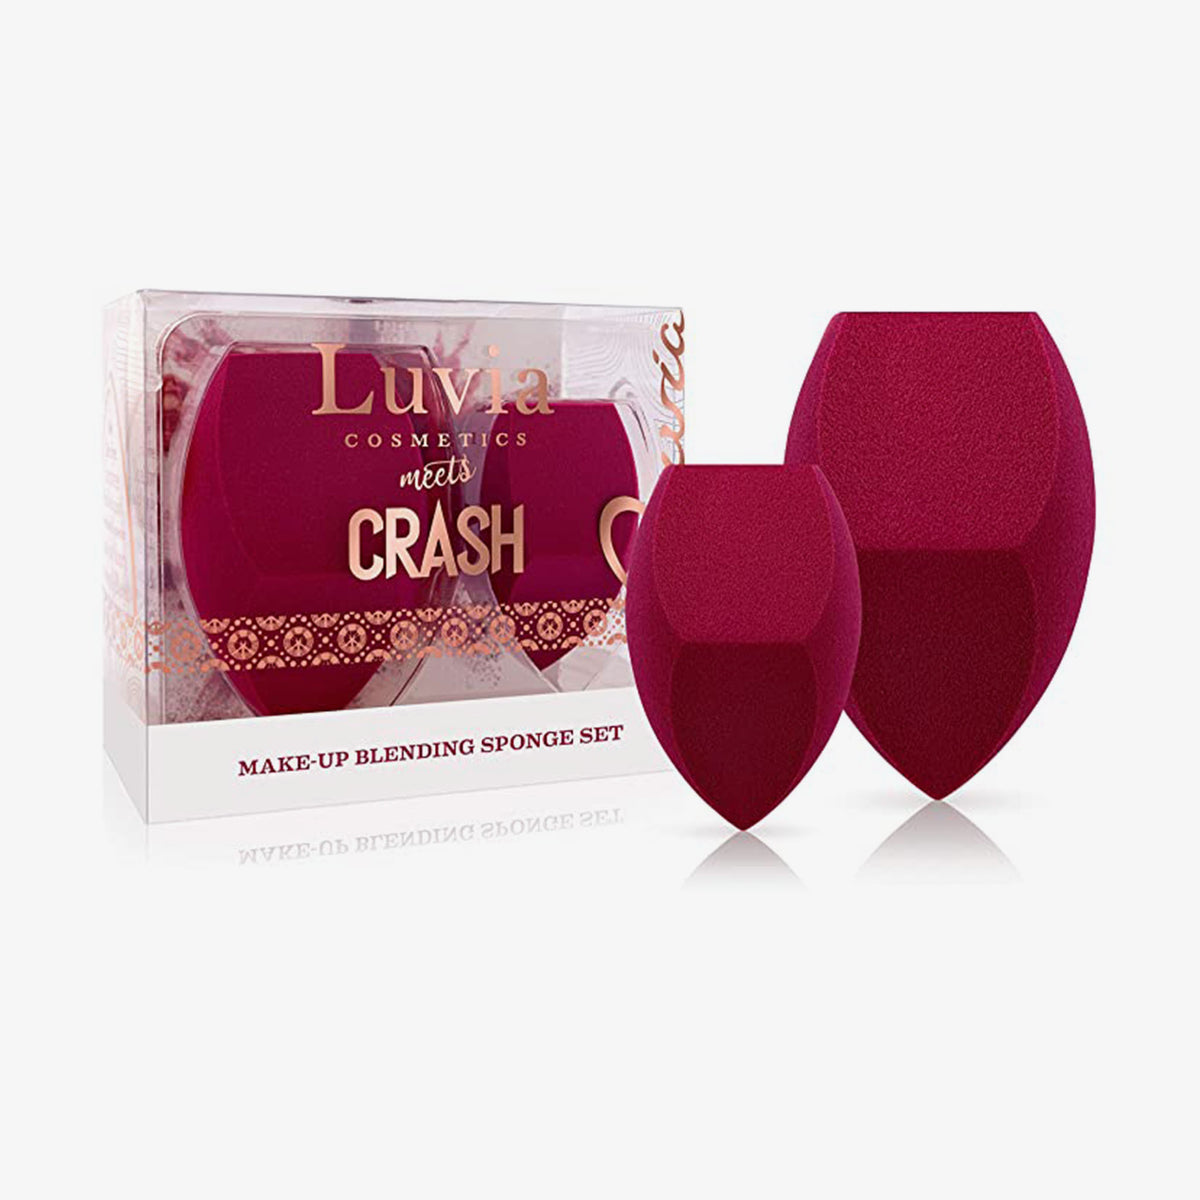 Luvia x Crash Make-Up Blending | PURISH Cosmetics CRASH Cosmetics Sponge Set